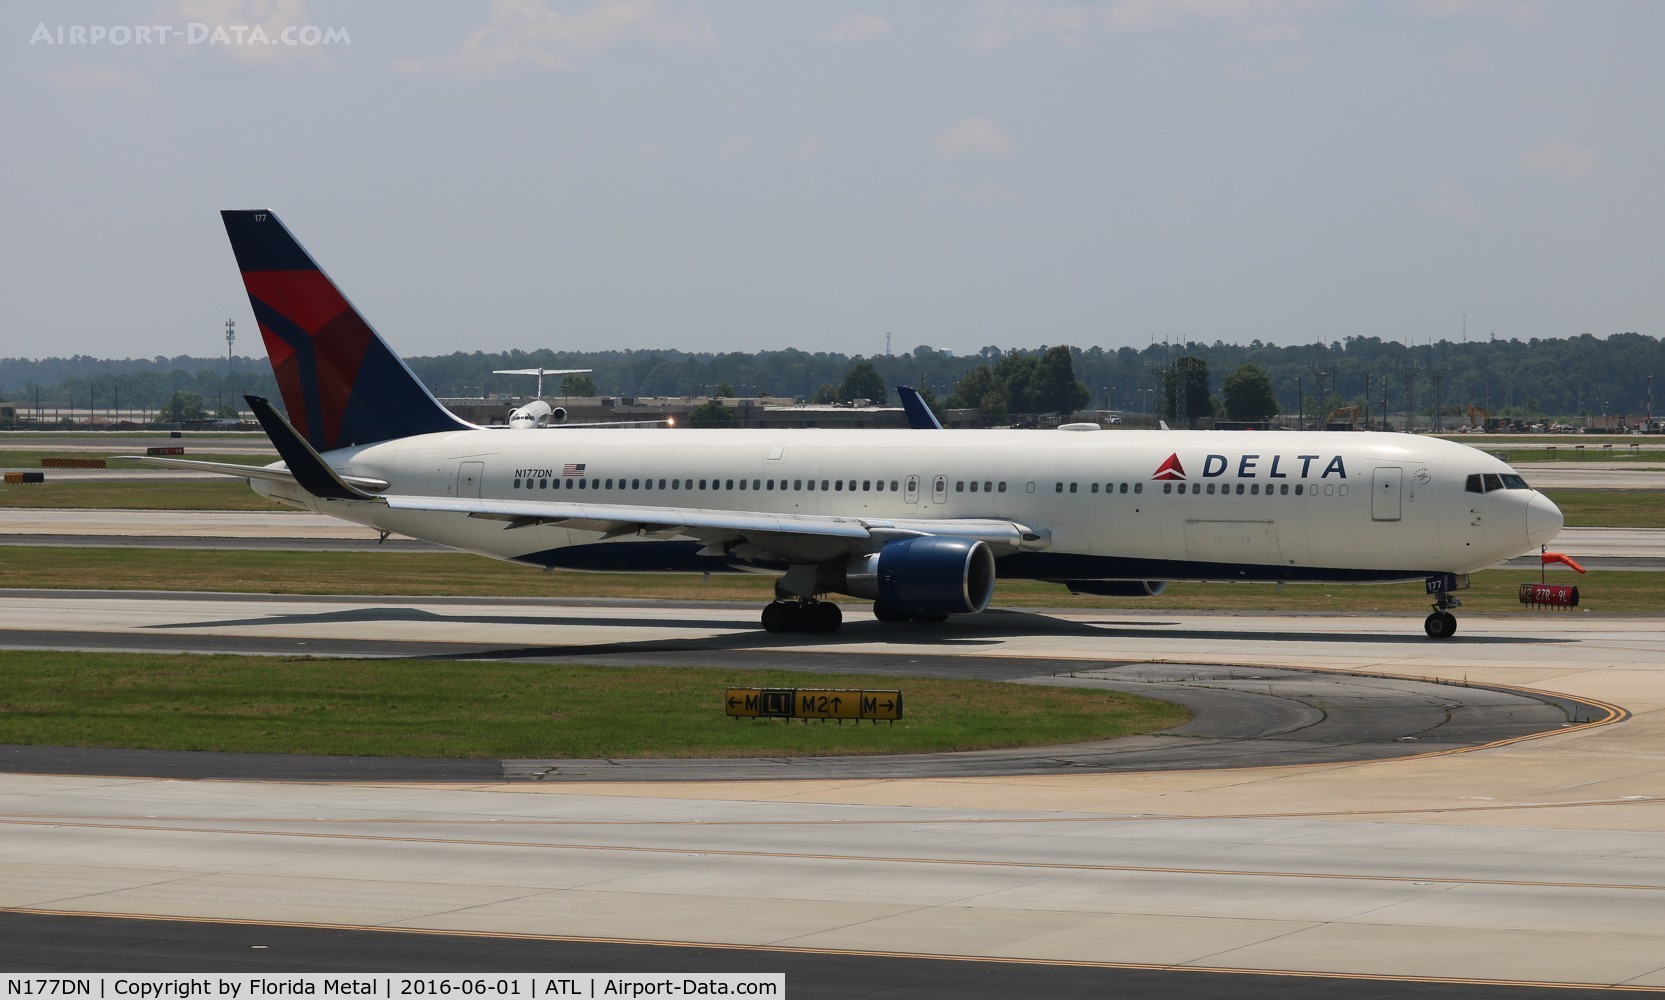 N177DN, 1991 Boeing 767-332 C/N 25122, Delta